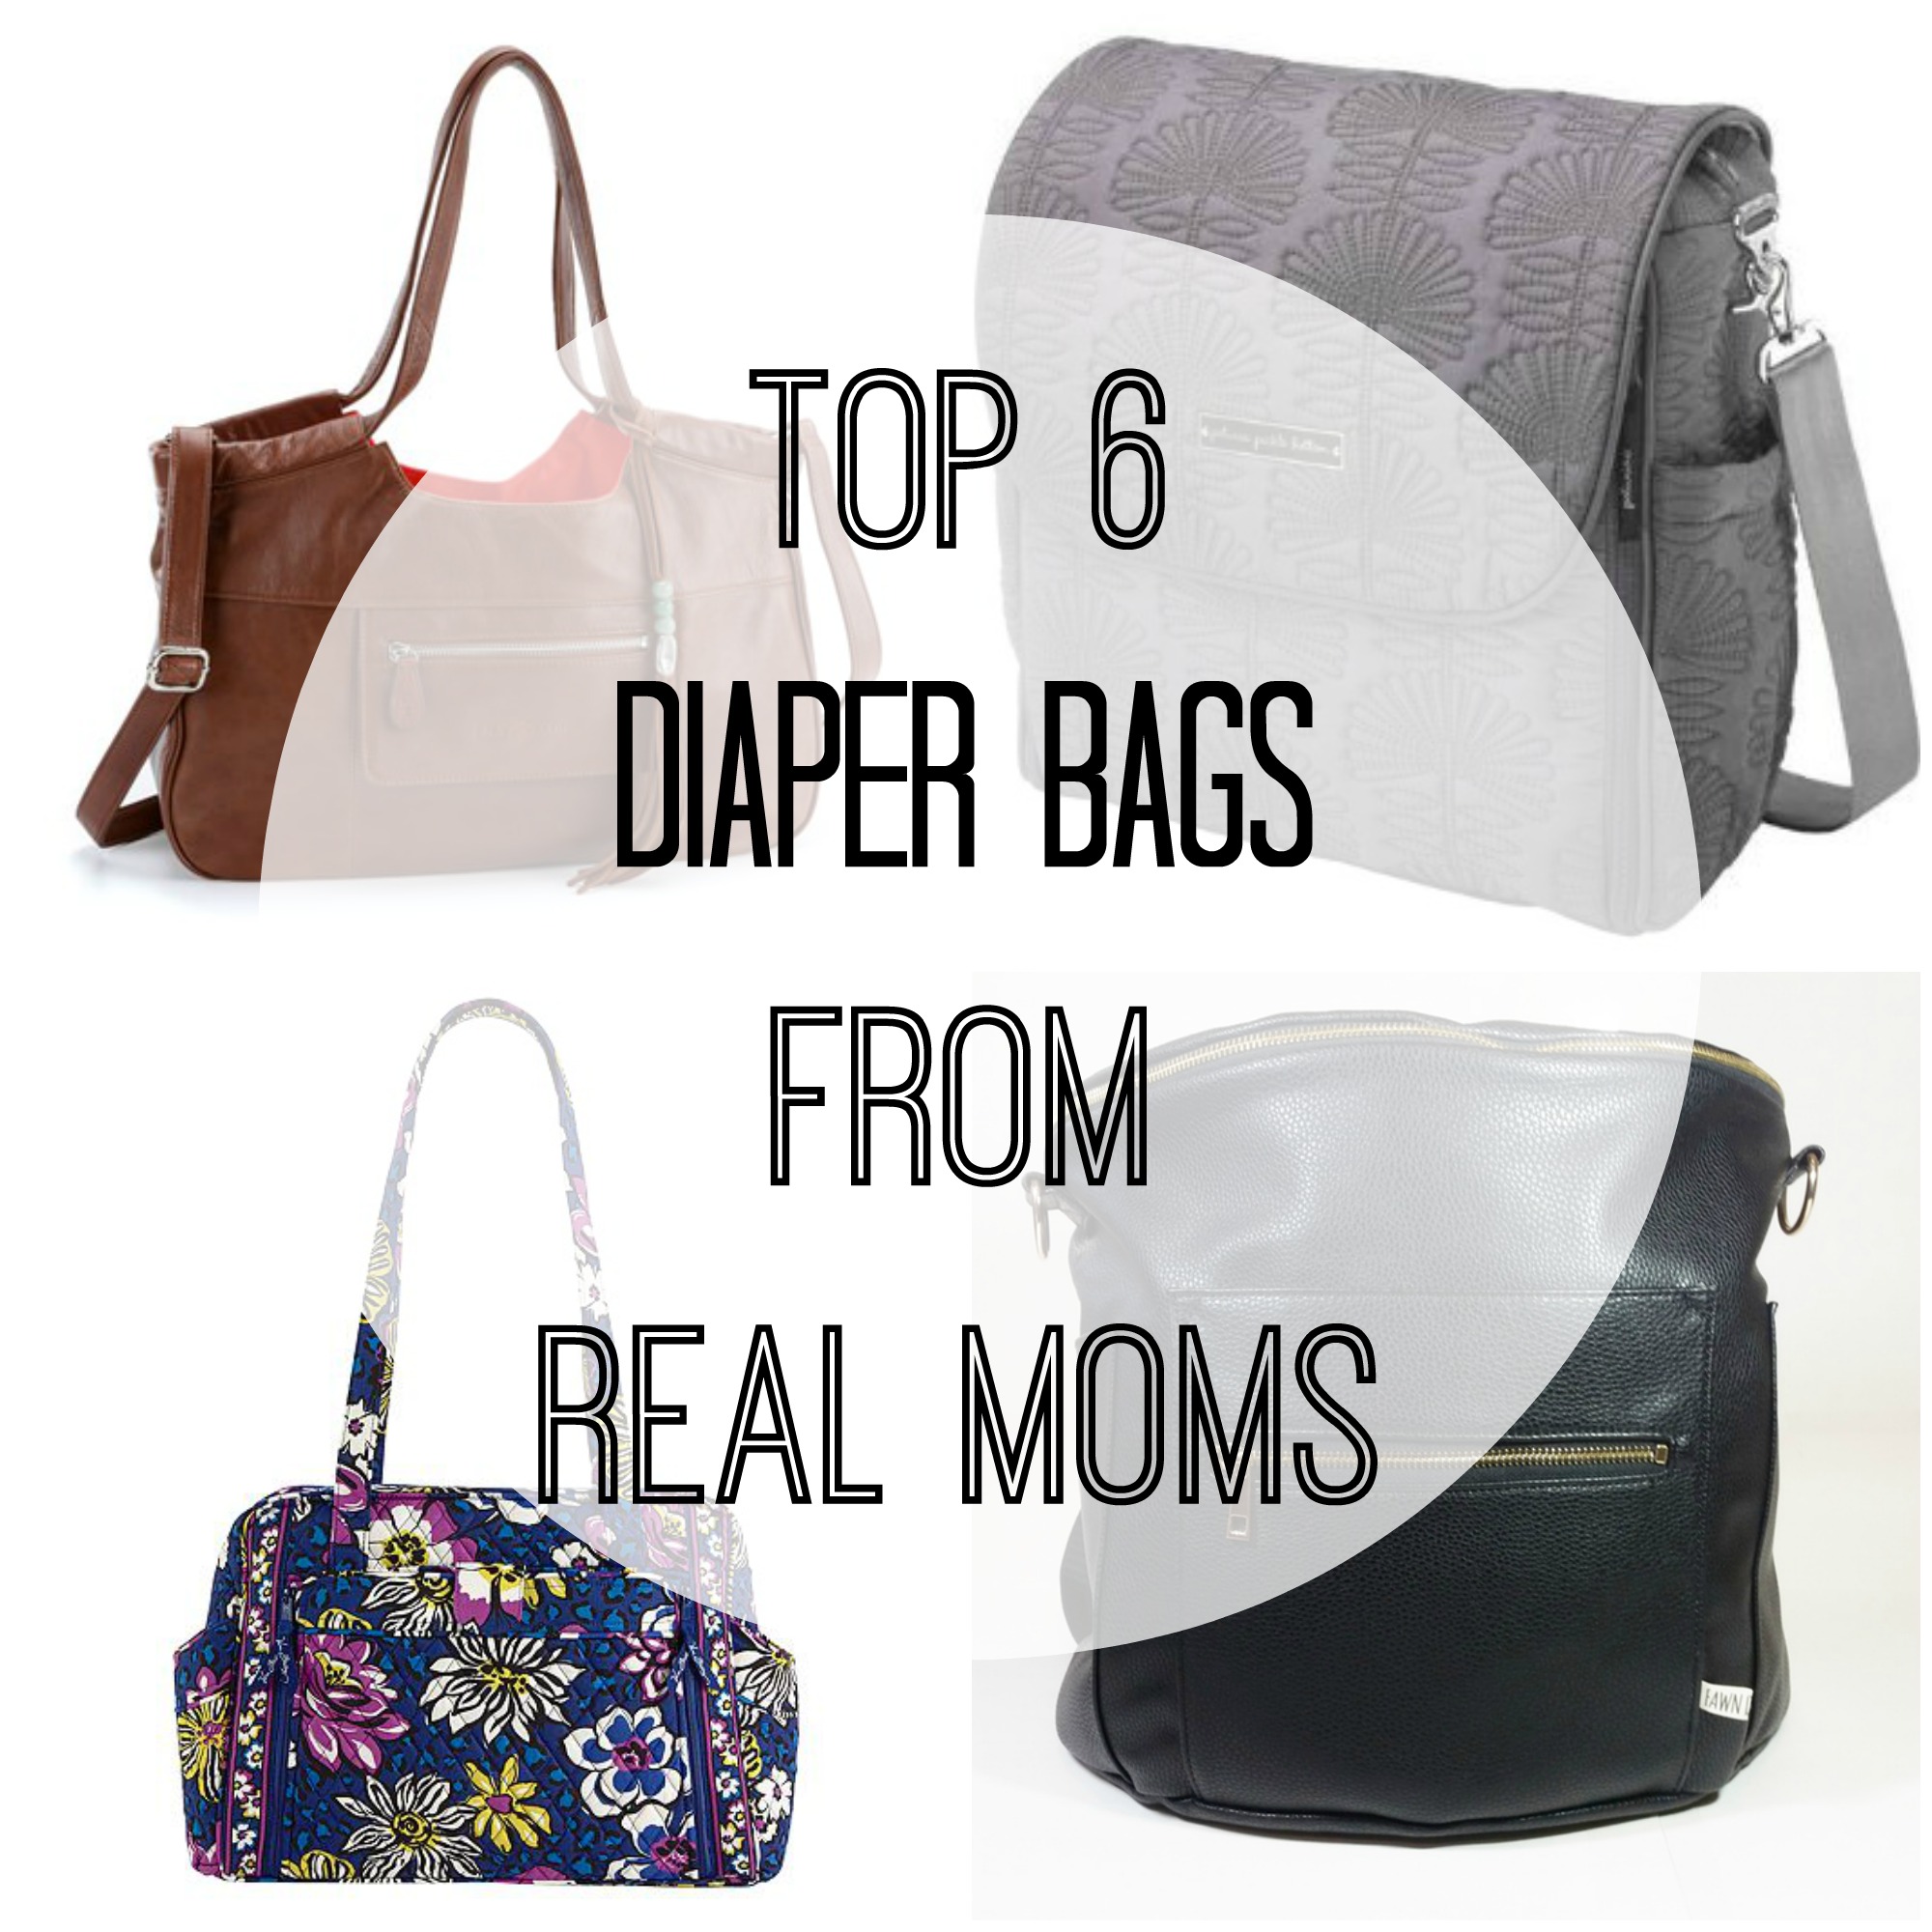 Top 6 Diaper Bags from Real Moms